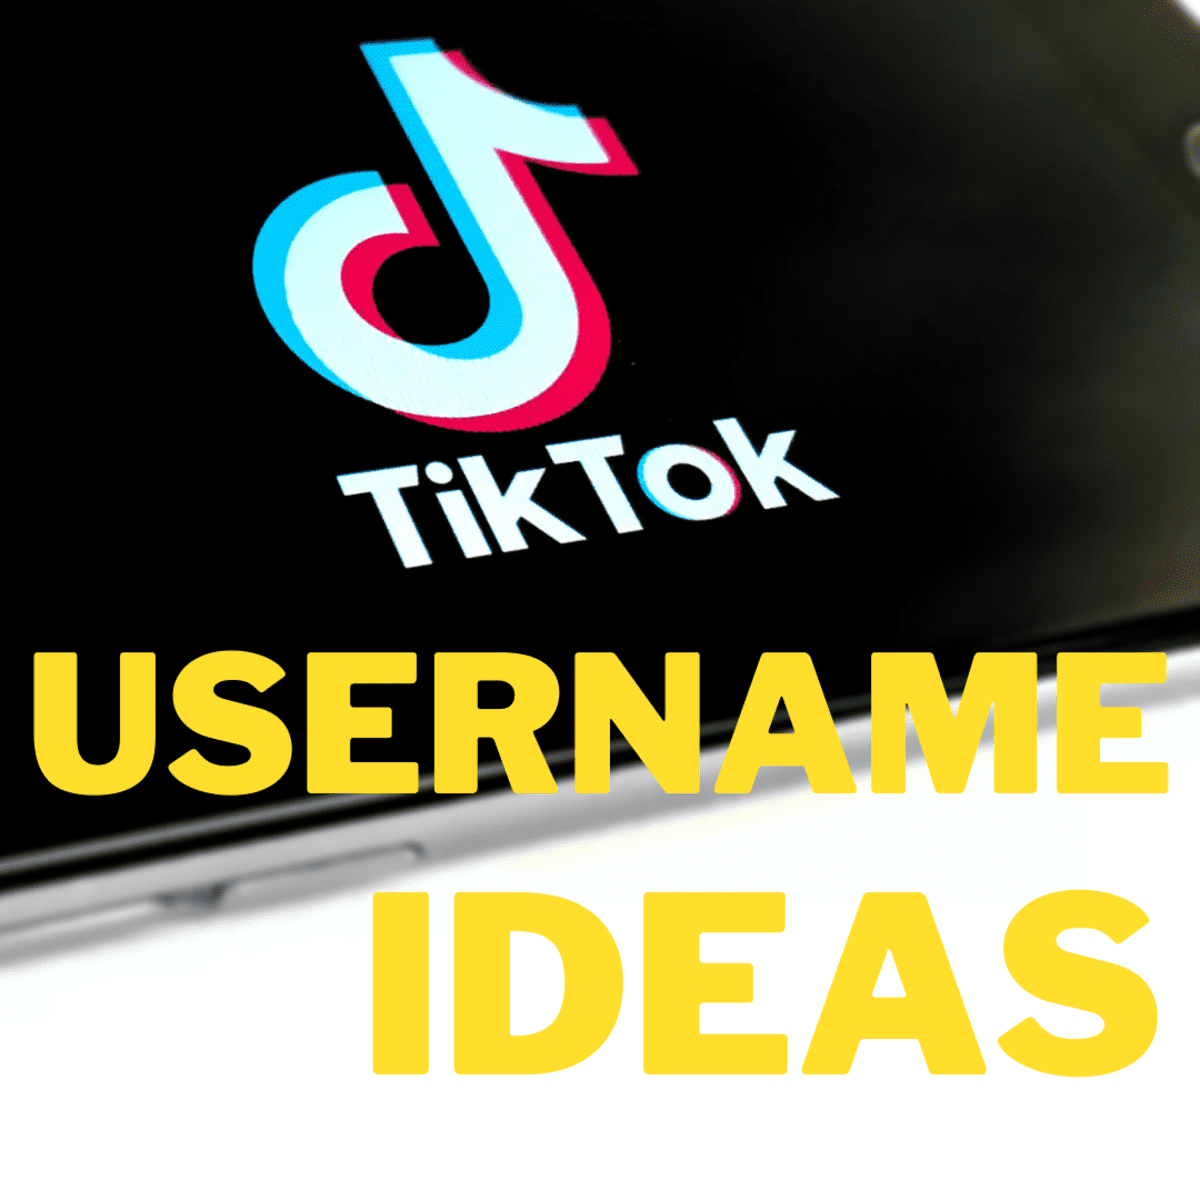 Witty username ideas